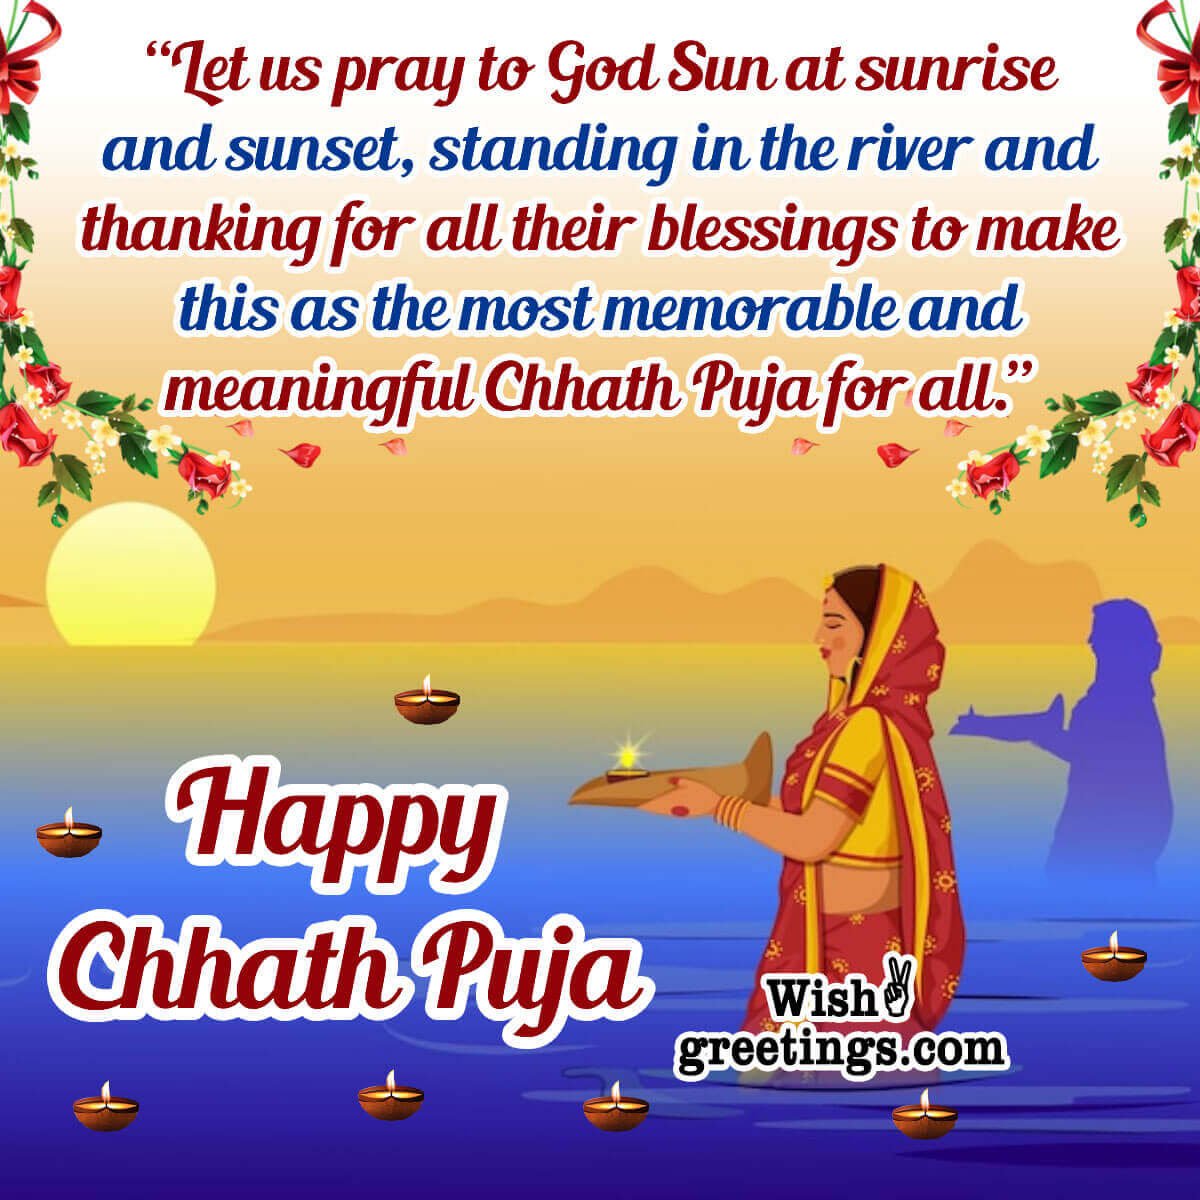 Chhath Puja Wishes